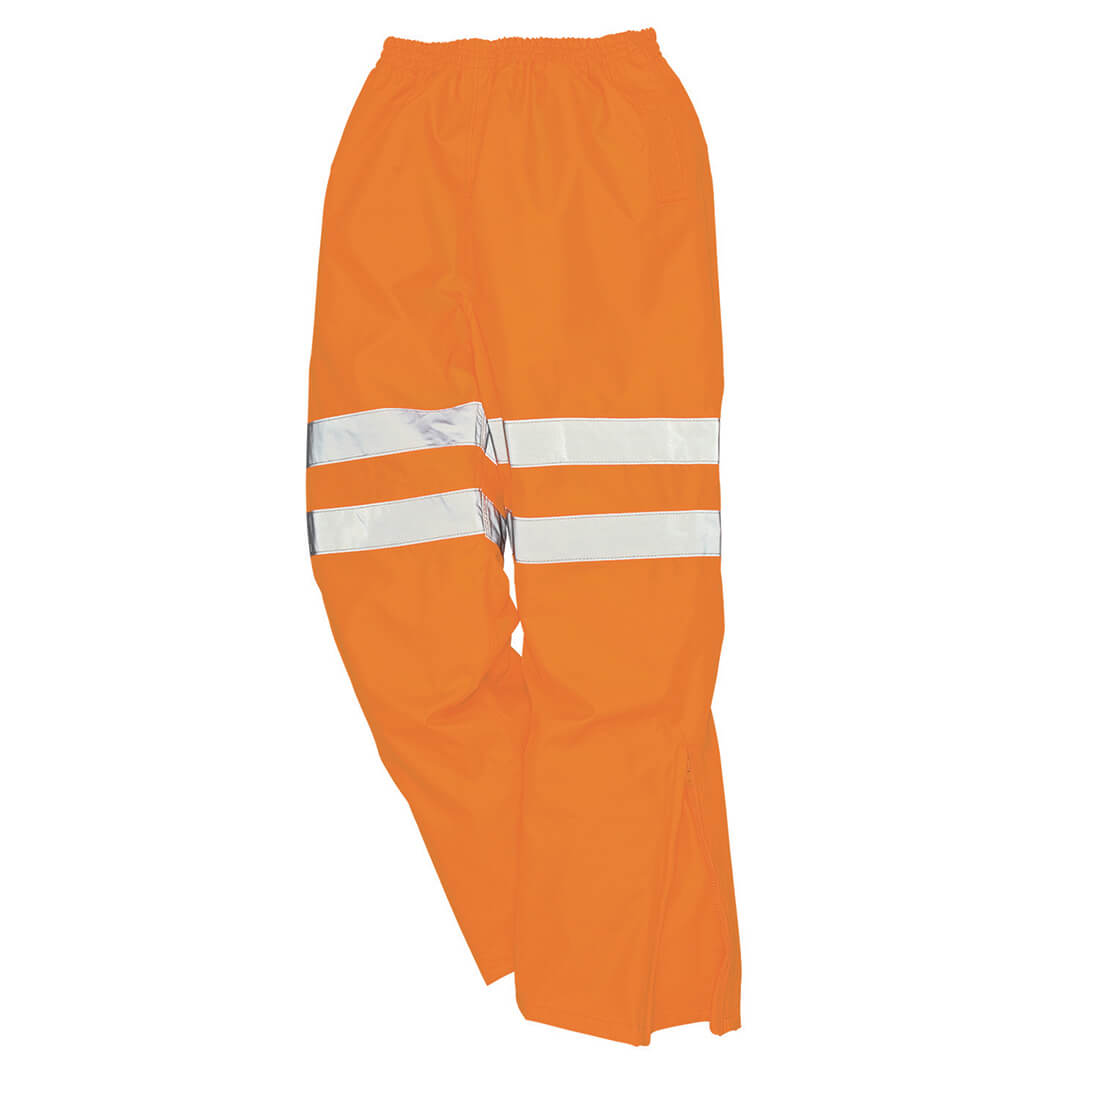 Image of Oxford Weave 300D Class 2 Breathable Hi Vis Breathable Trousers Orange M